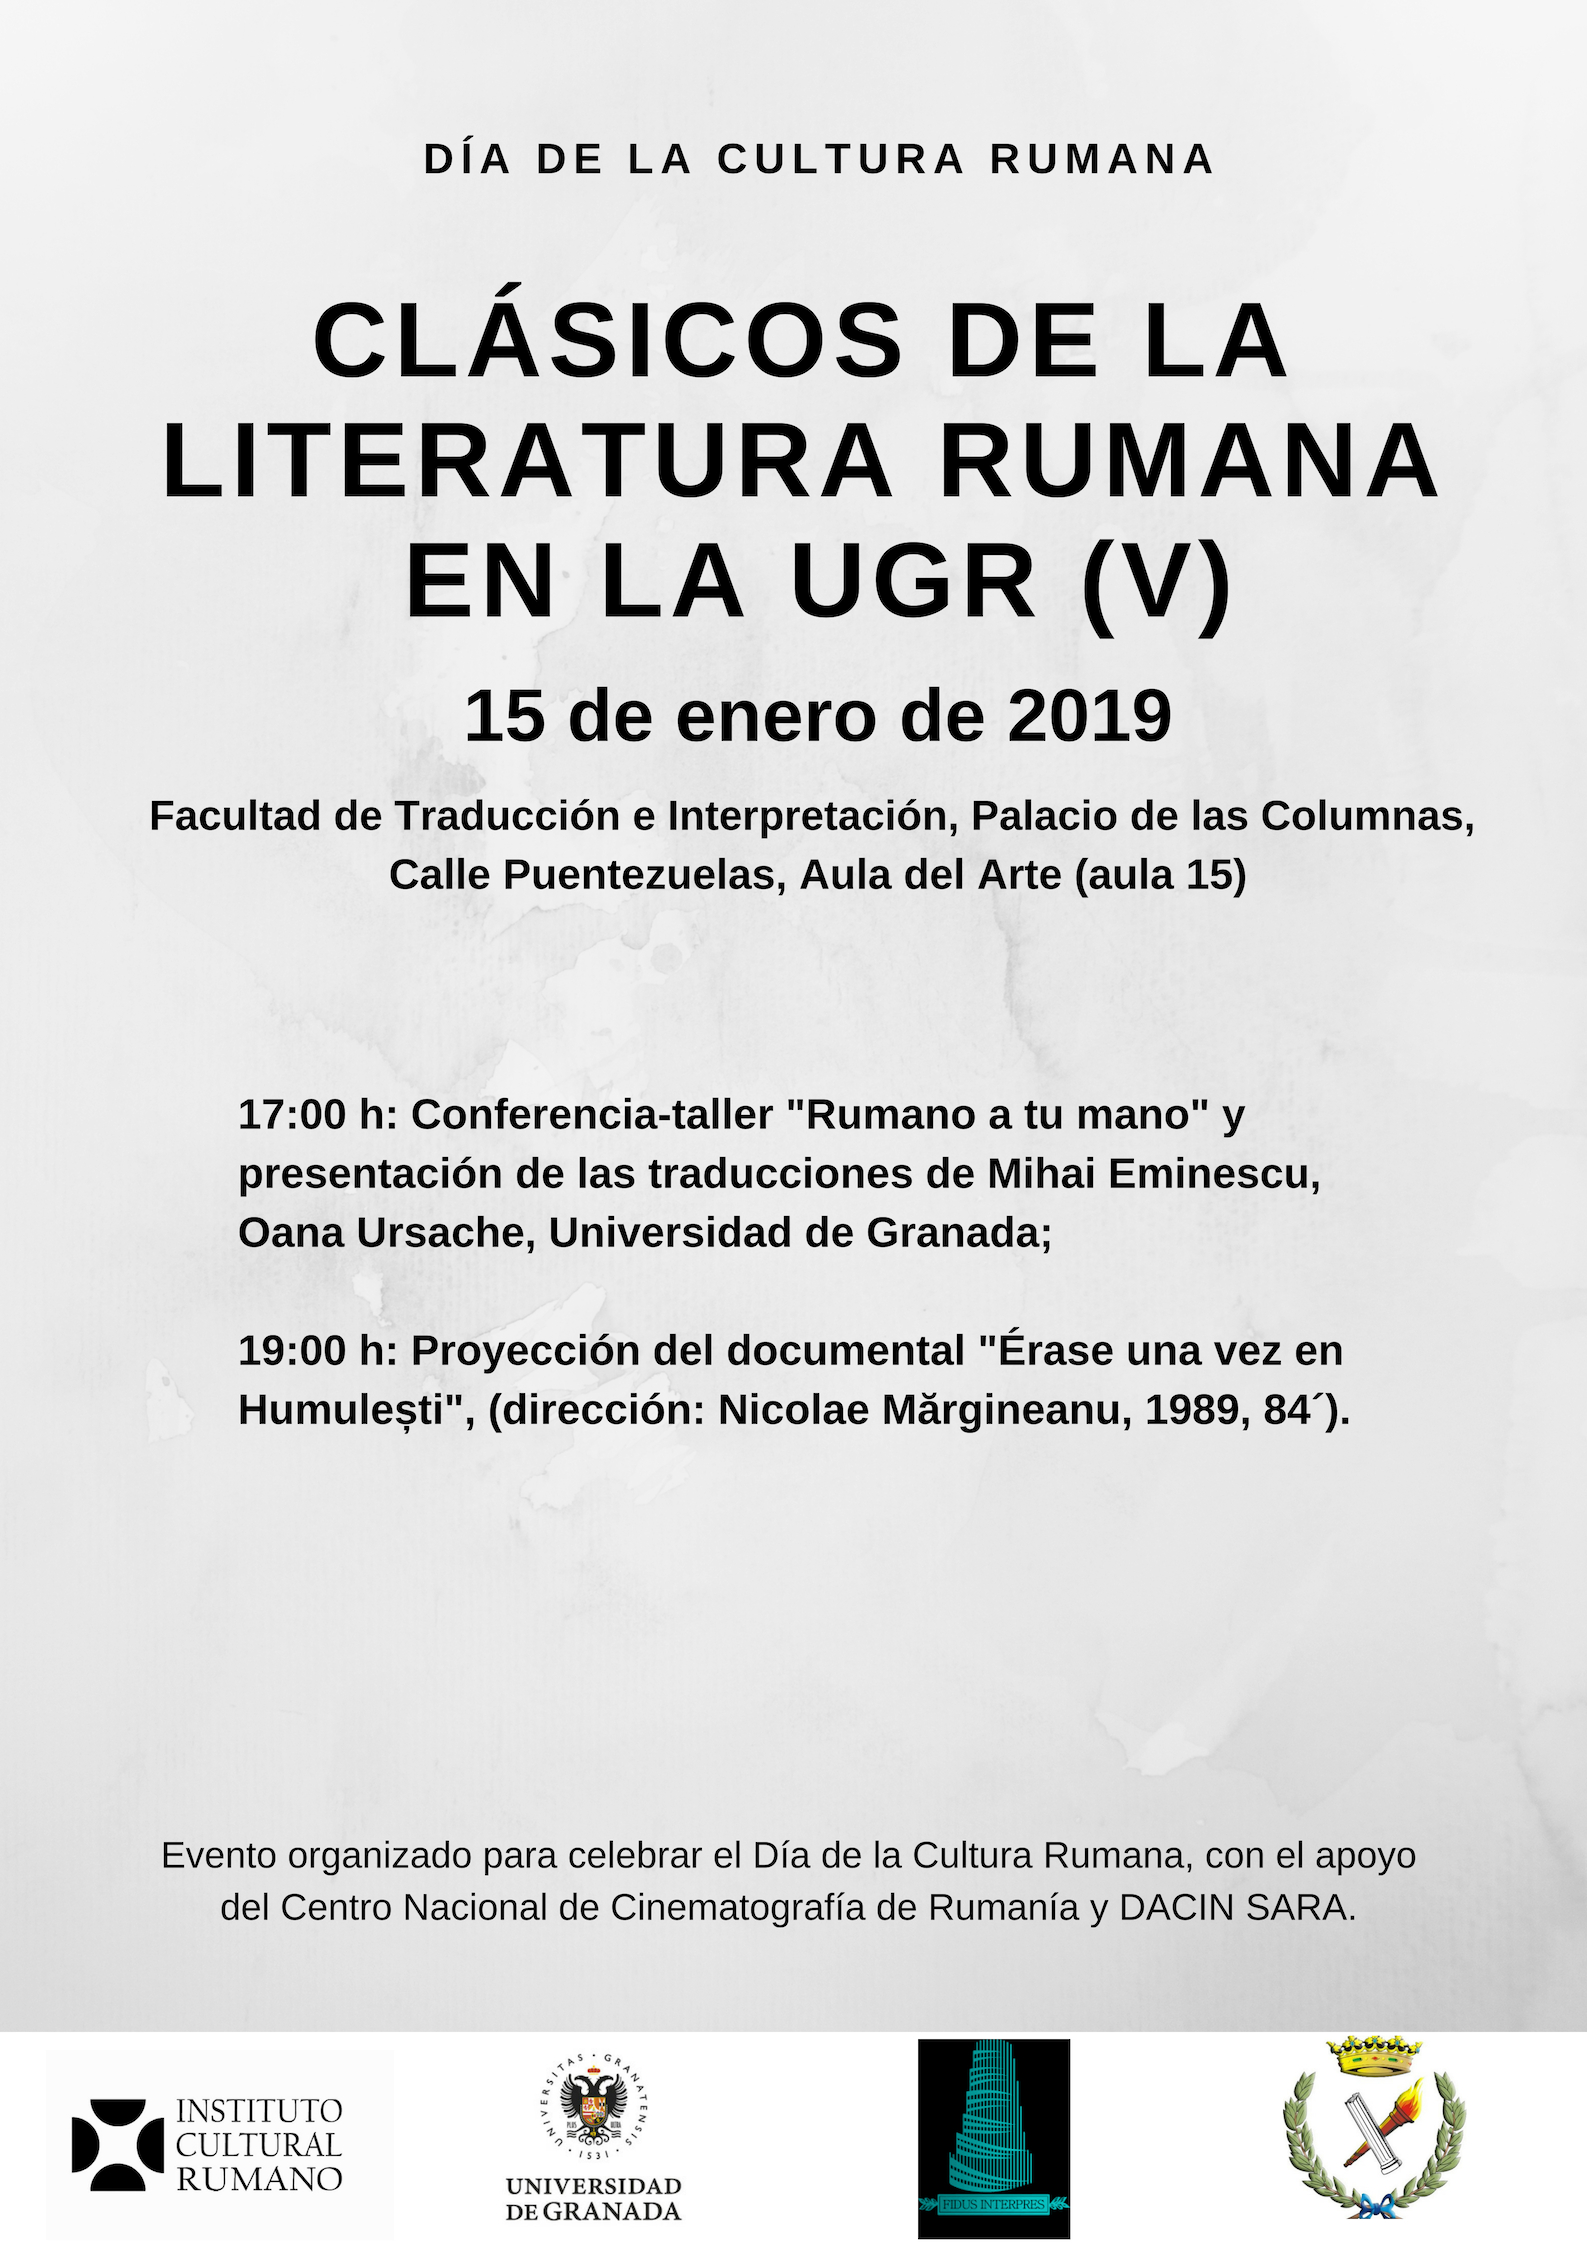 Clasicos de la literatura rumana (V) CARTEL def